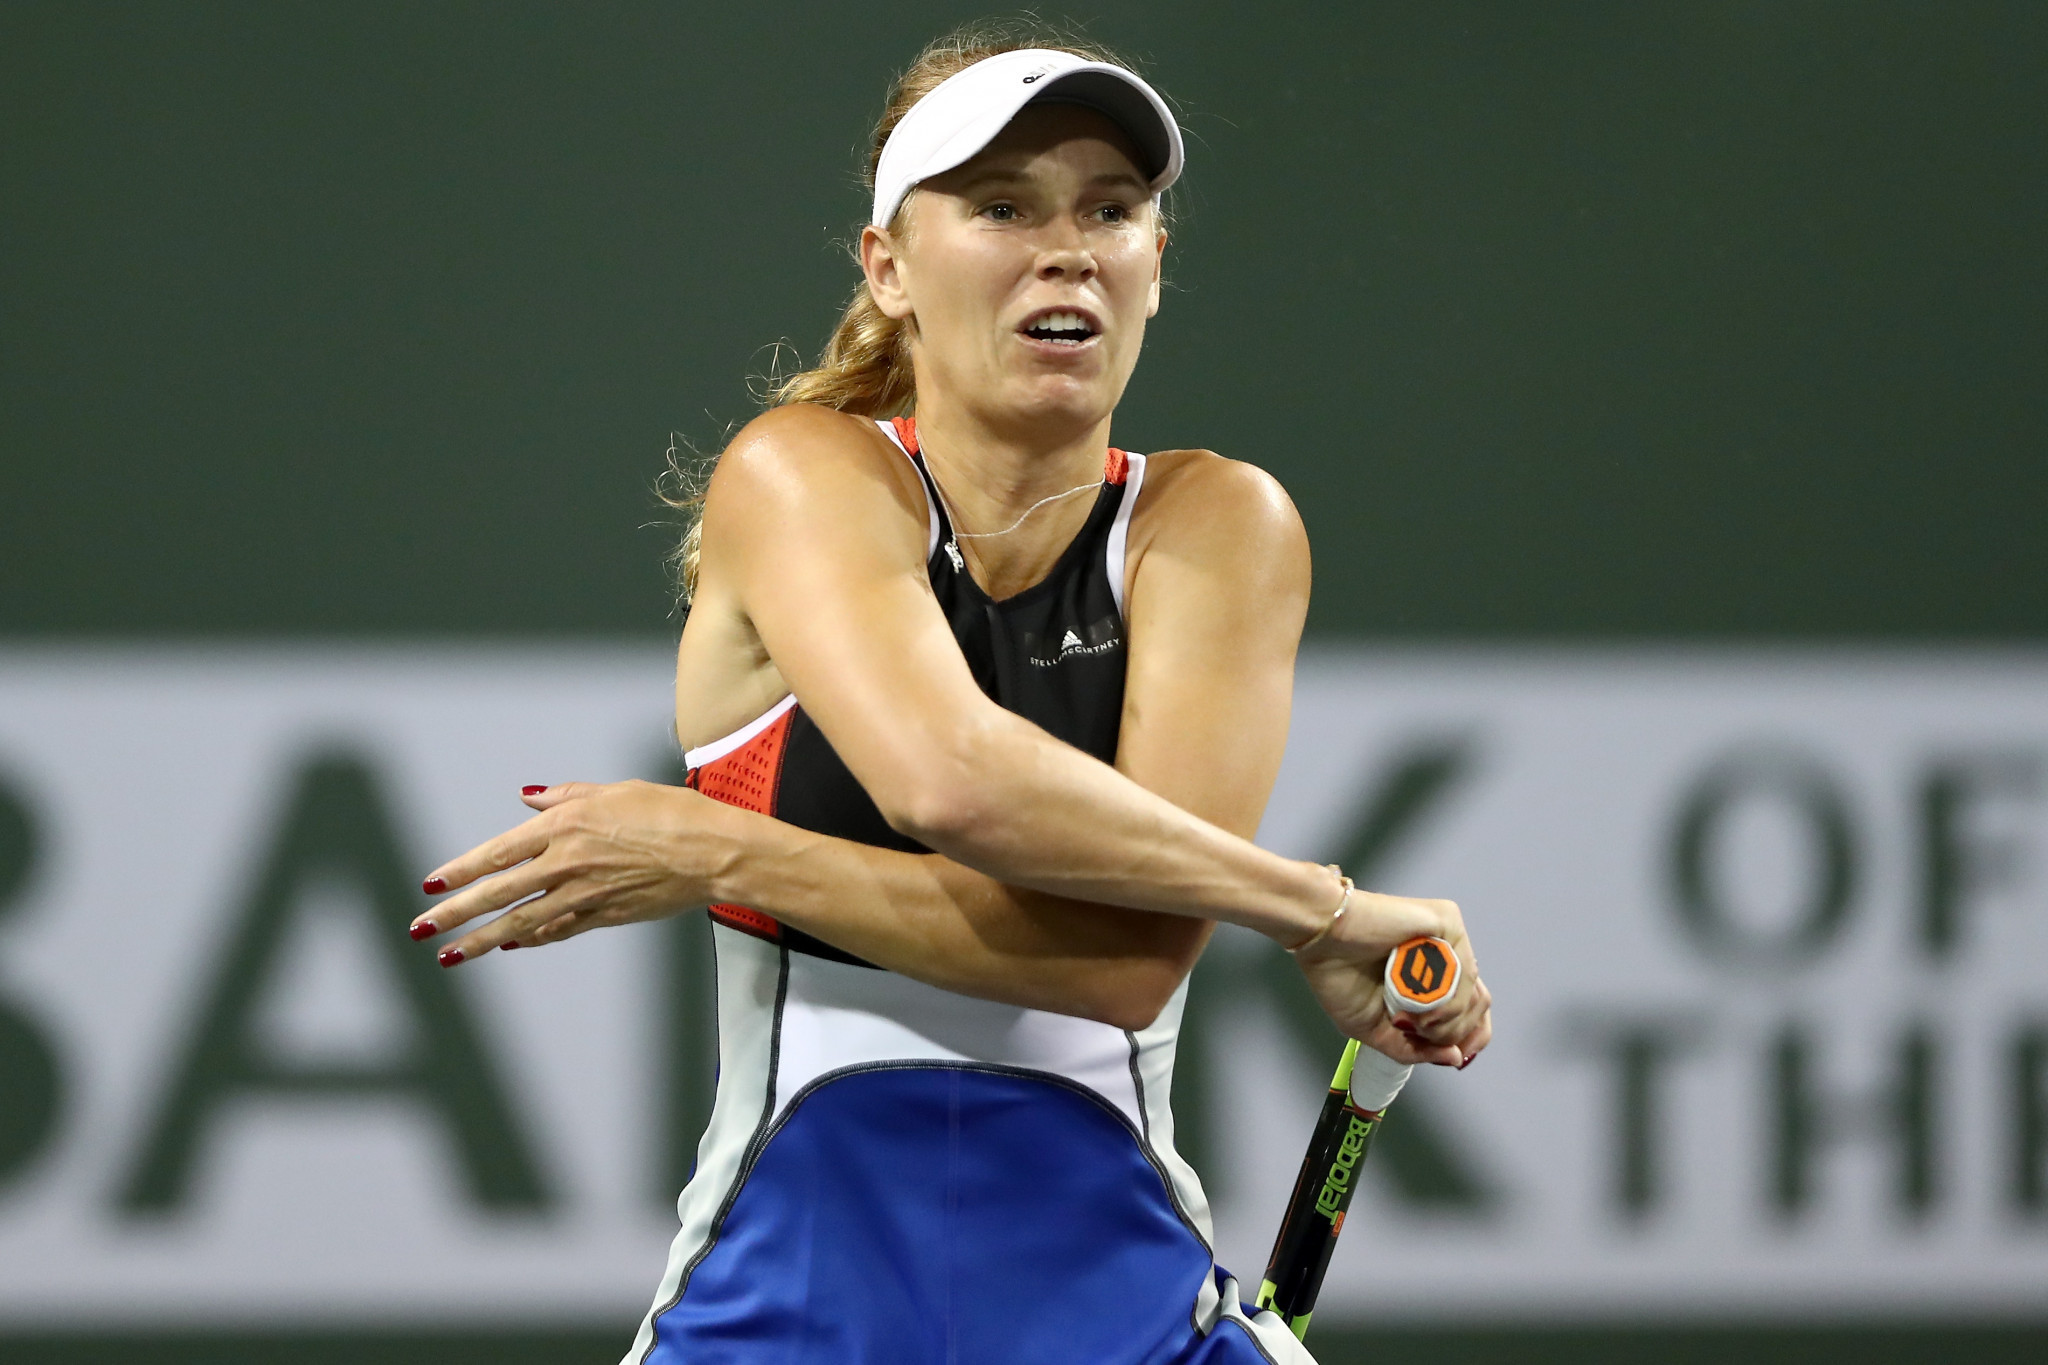 Kasatkina beats Wozniacki to reach quarter-finals at Indian Wells Masters